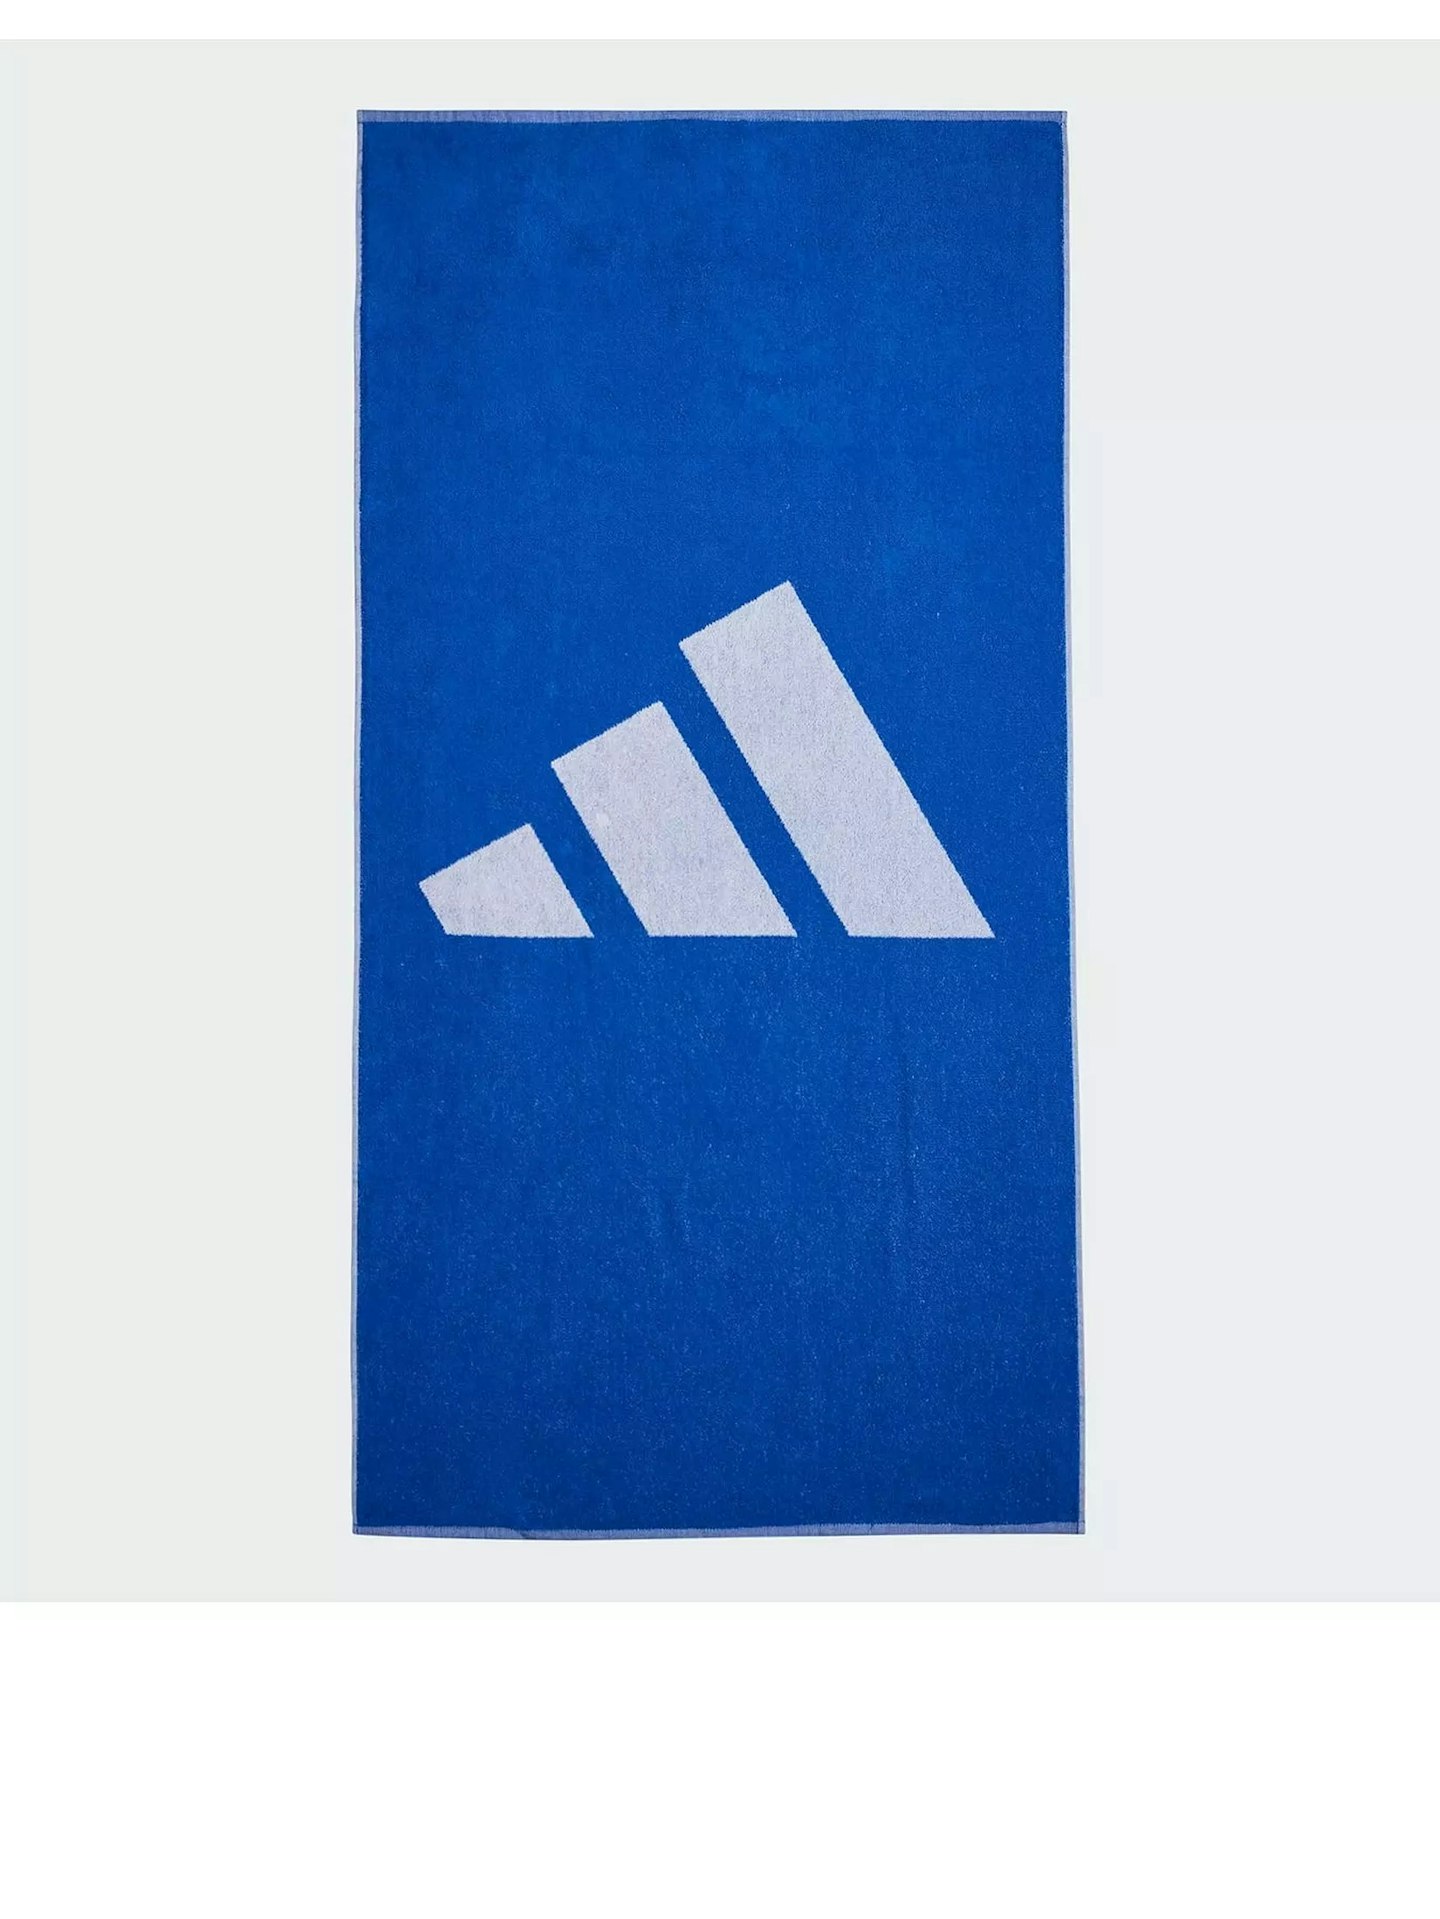 Adidas Towel Large